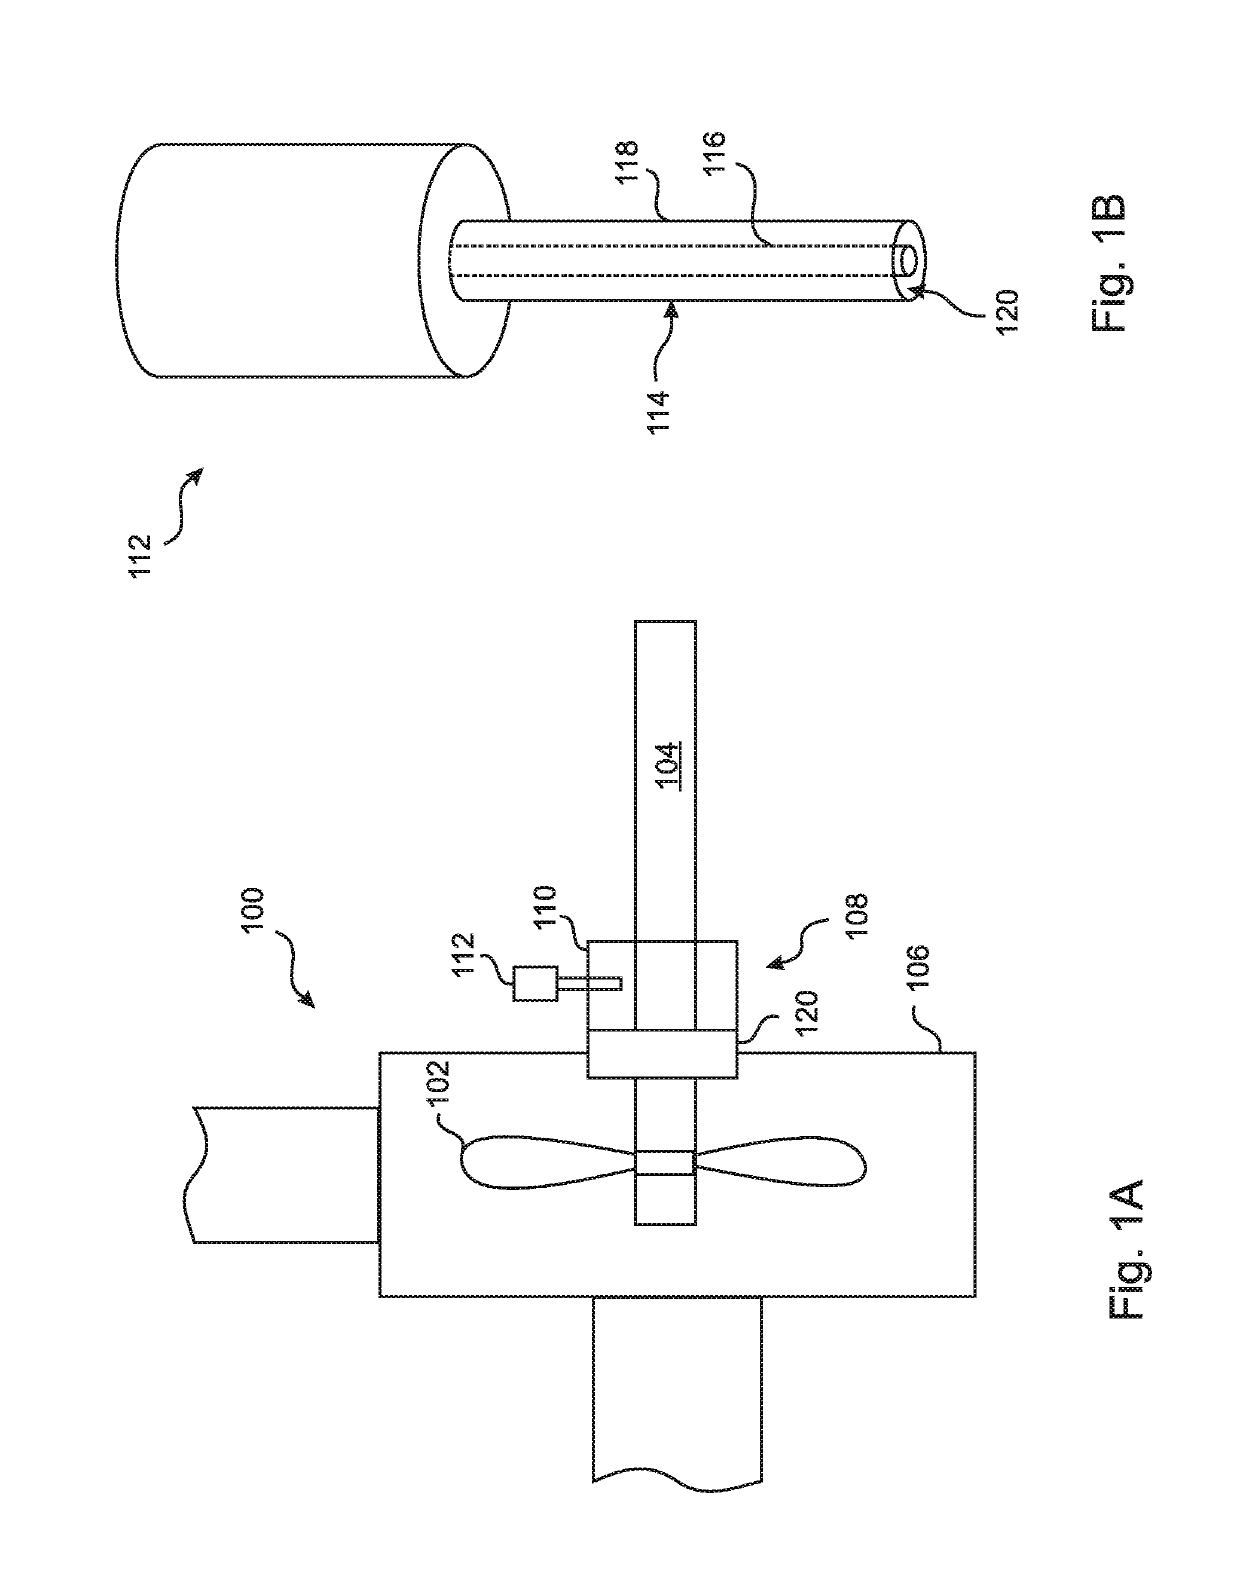 Capacitance sensing apparatus and method for detecting gas-liquid transitions